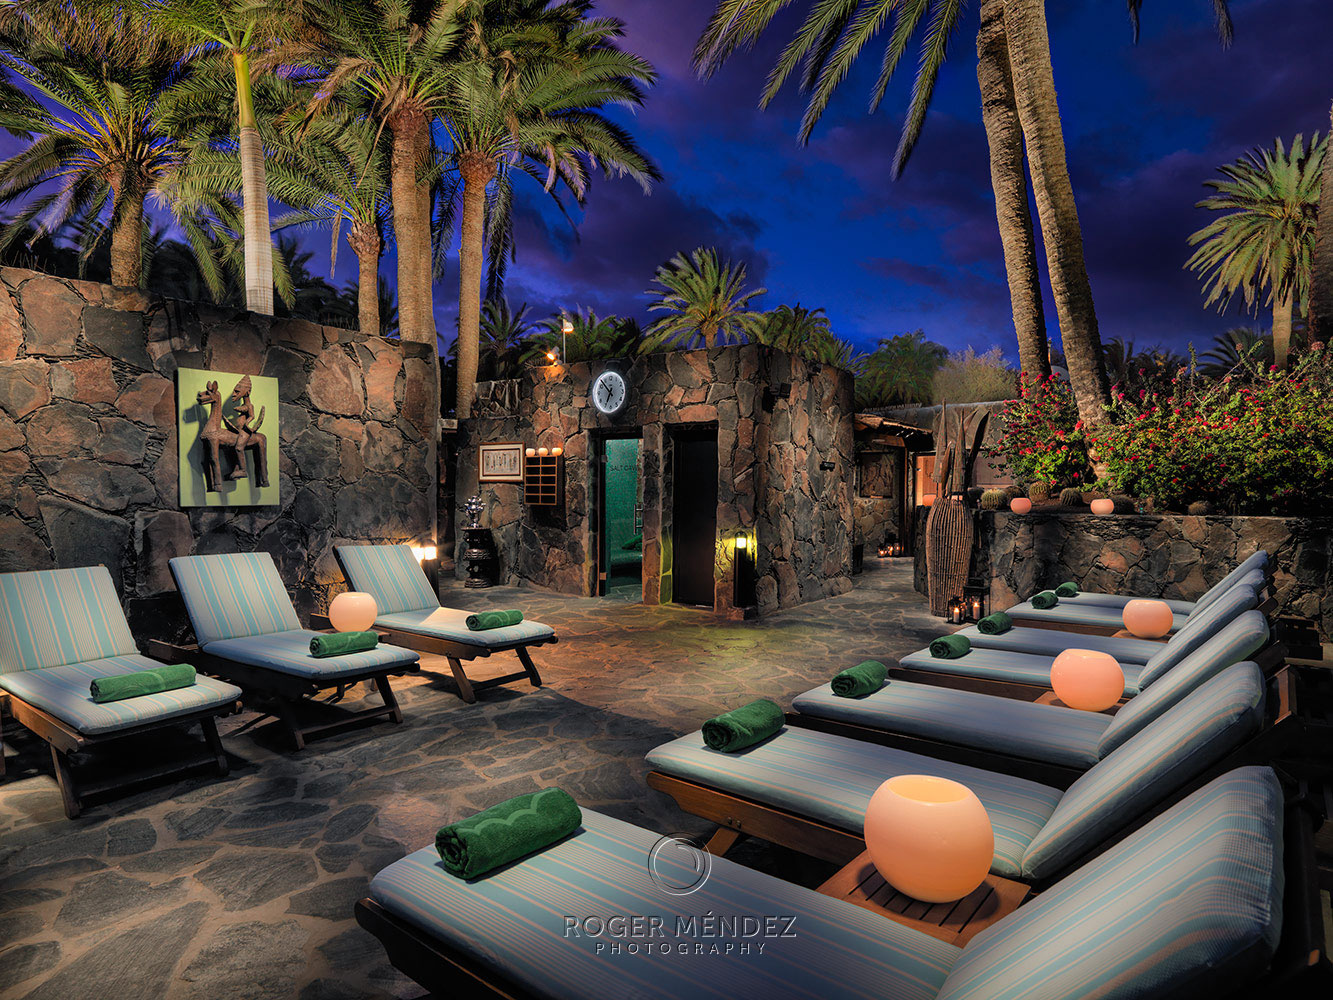 Seaside Palm Beach hotel. Spa relax zone and sauna